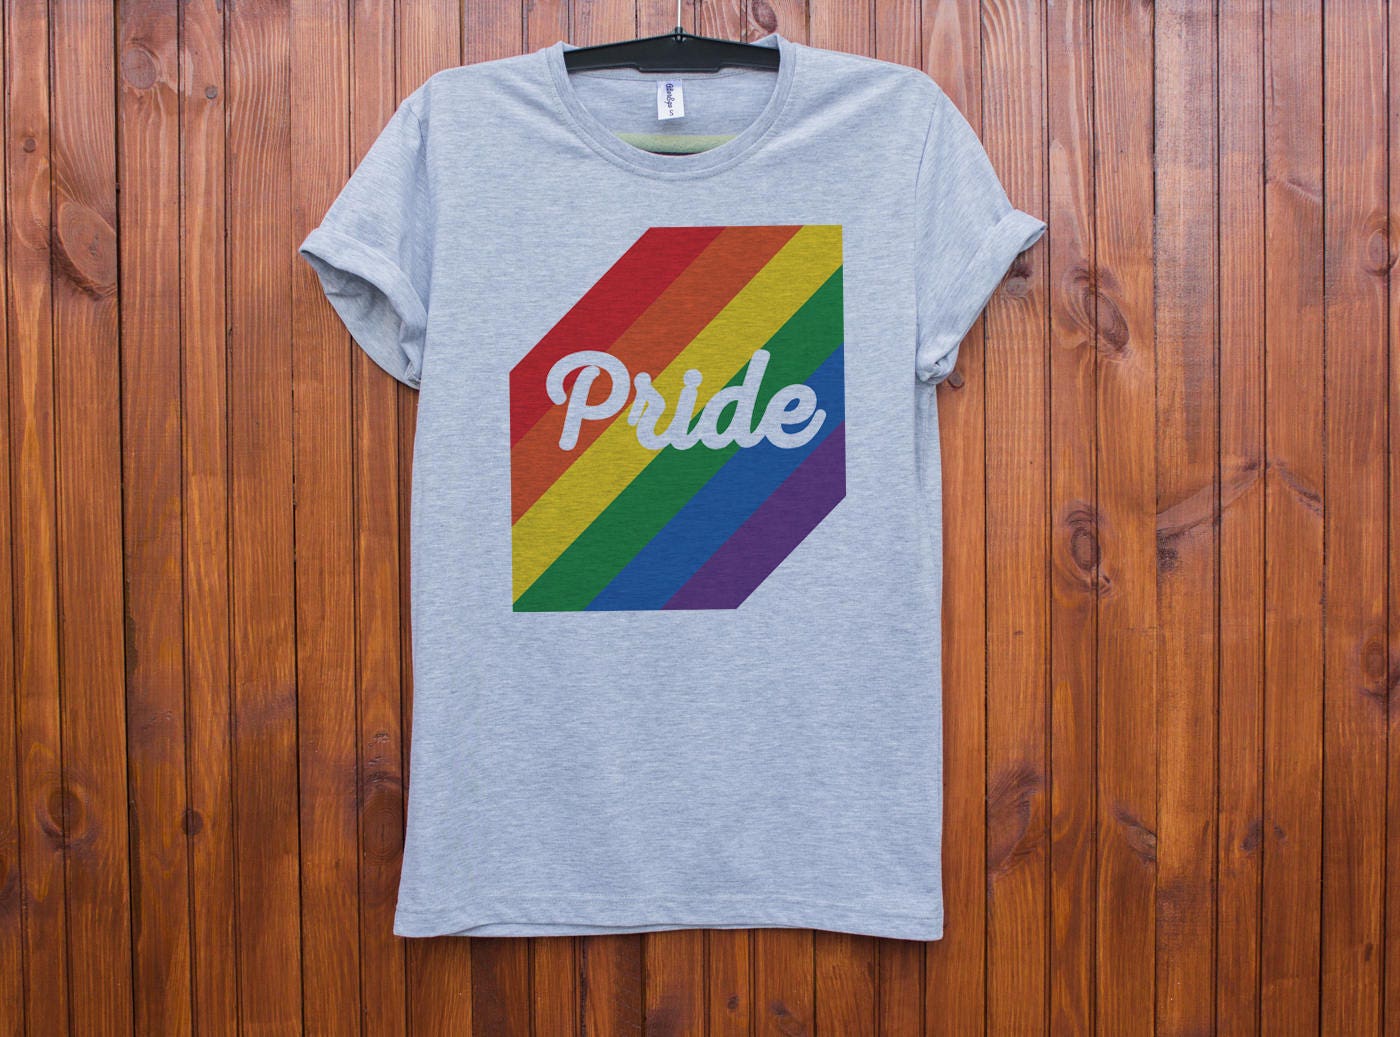 gay pride clothing